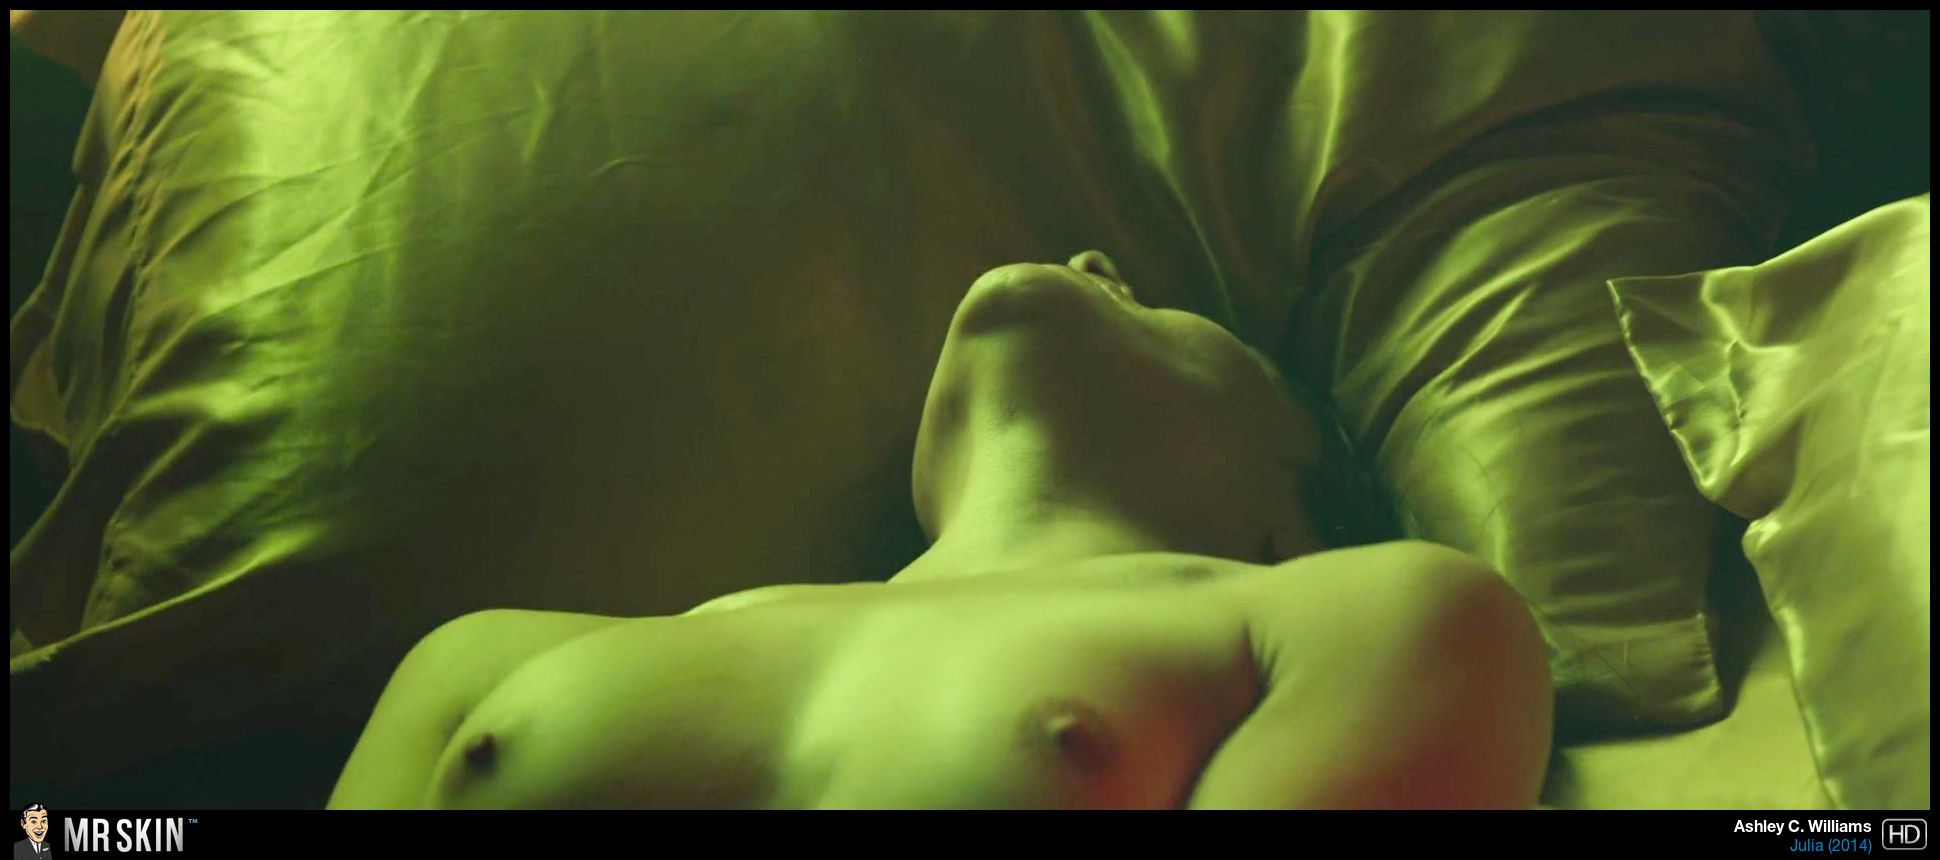 Ashley C. Williams nude pics.